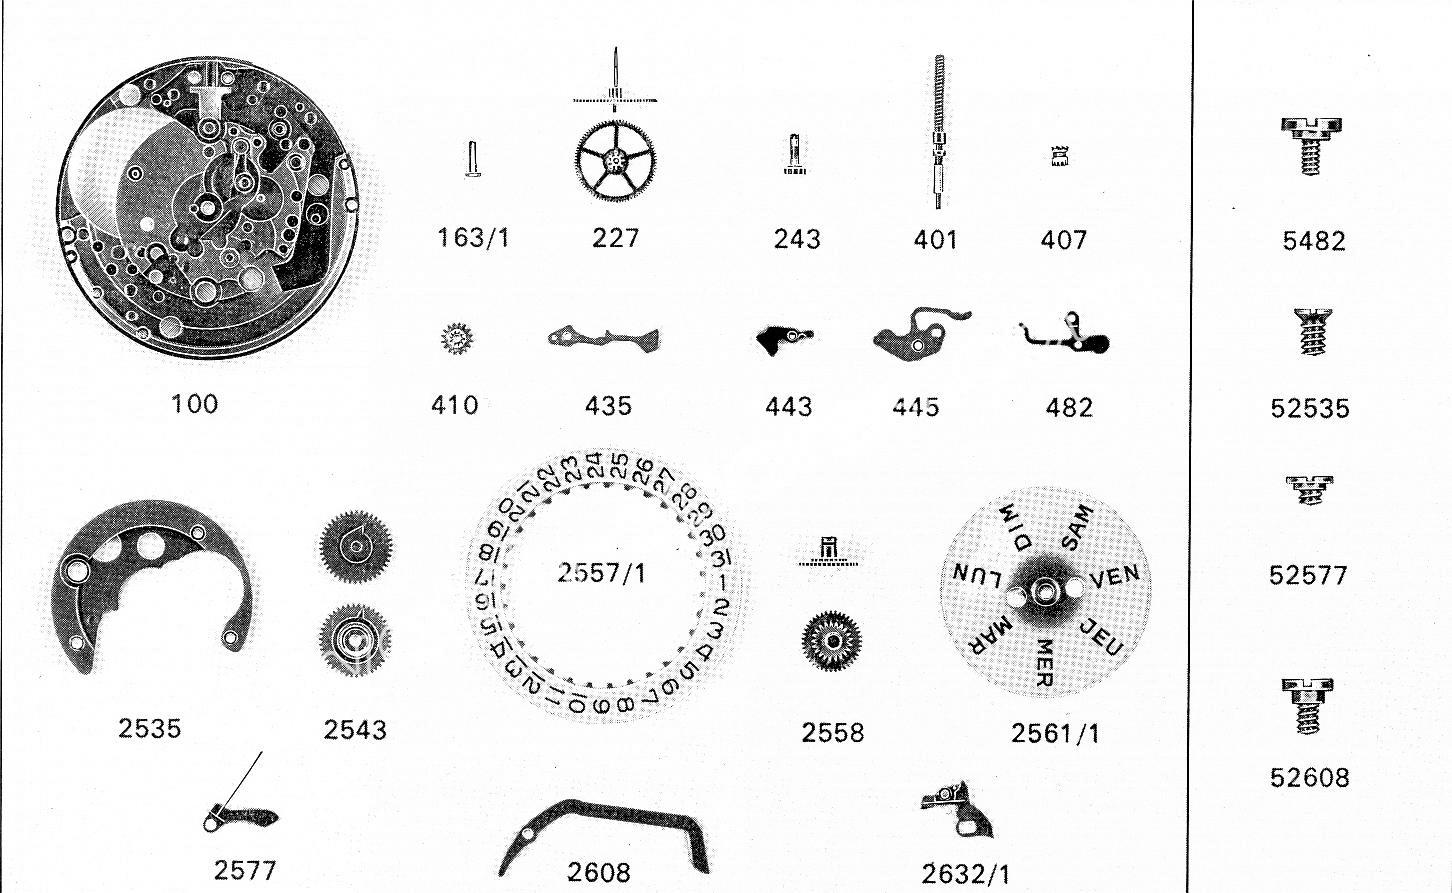 Favre leuba FL 1134 watch date parts